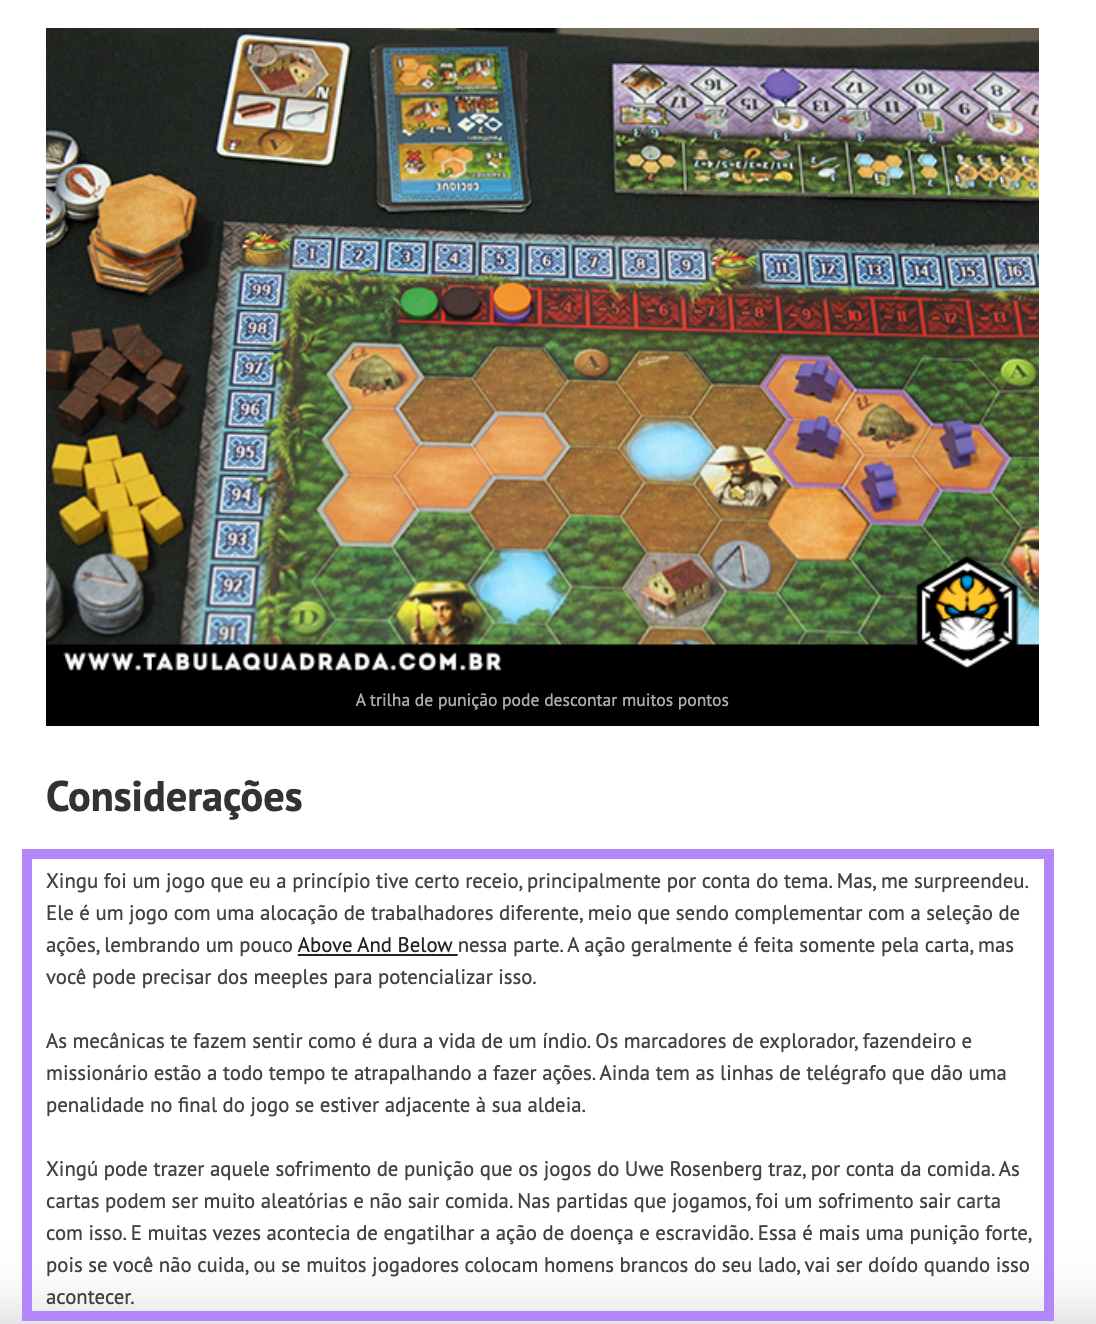 Captura de tela da análise do jogo brasileiro de tabuleiro Xingu